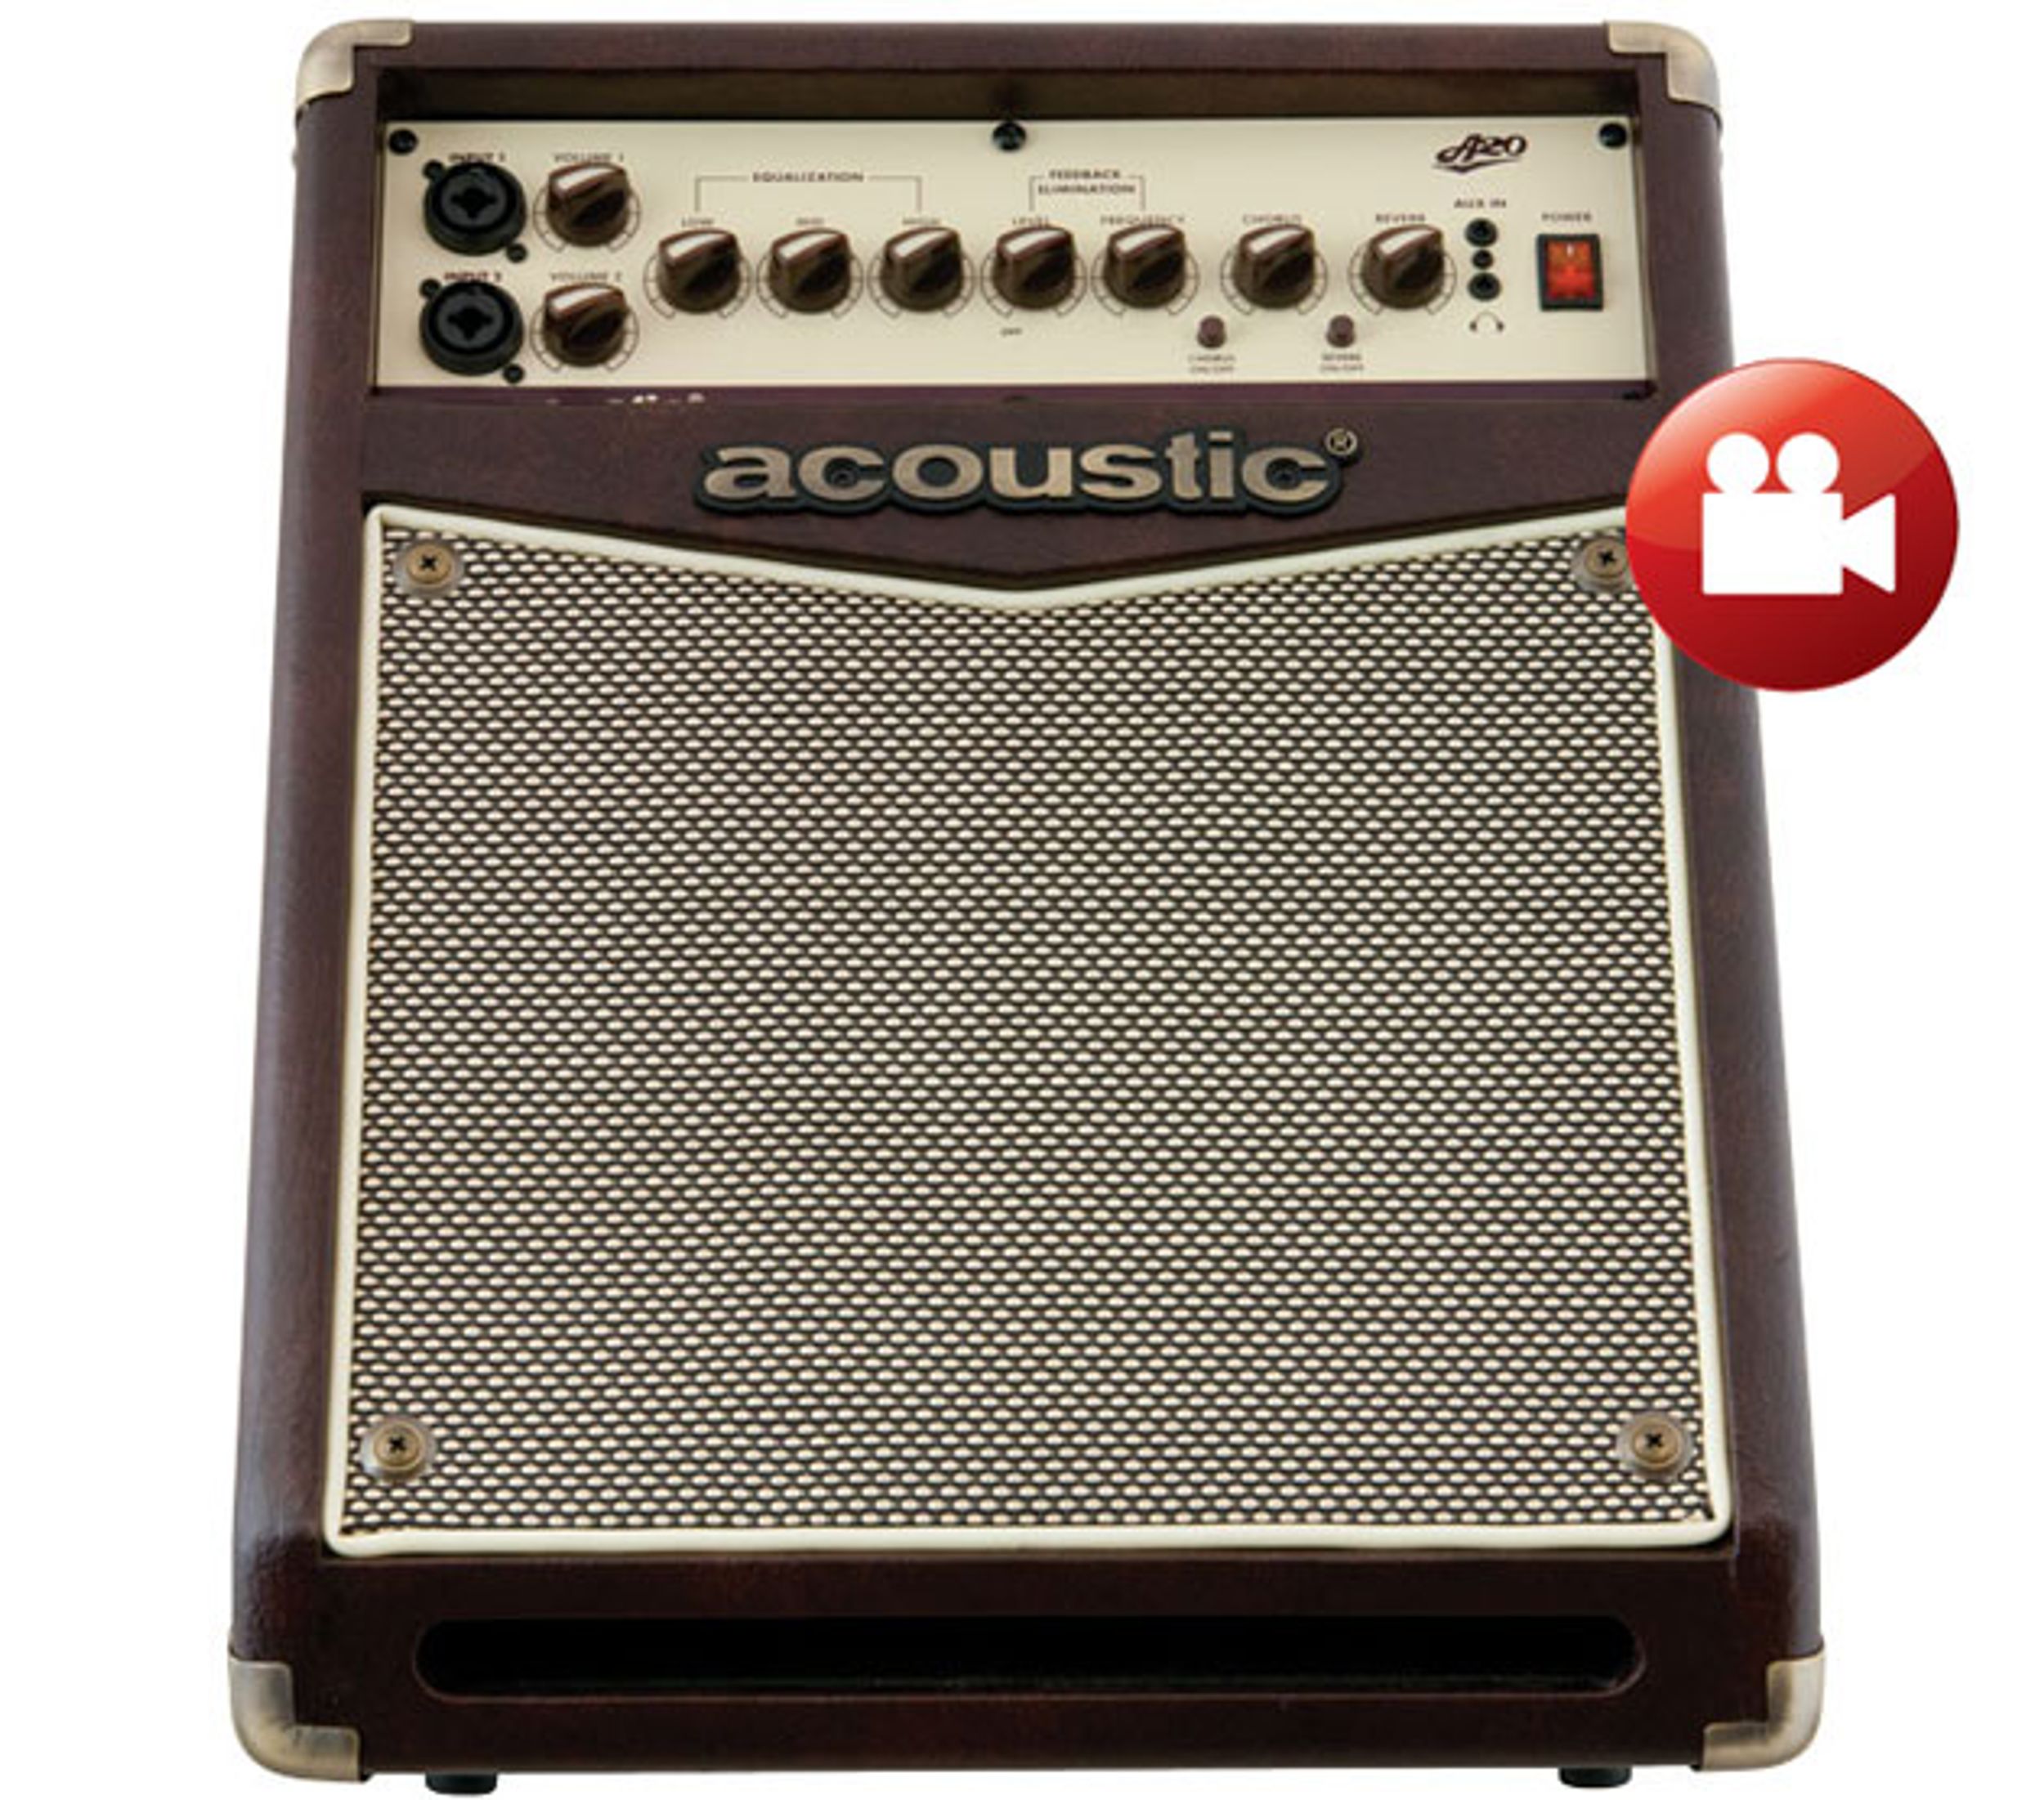 Acoustic A20 Review